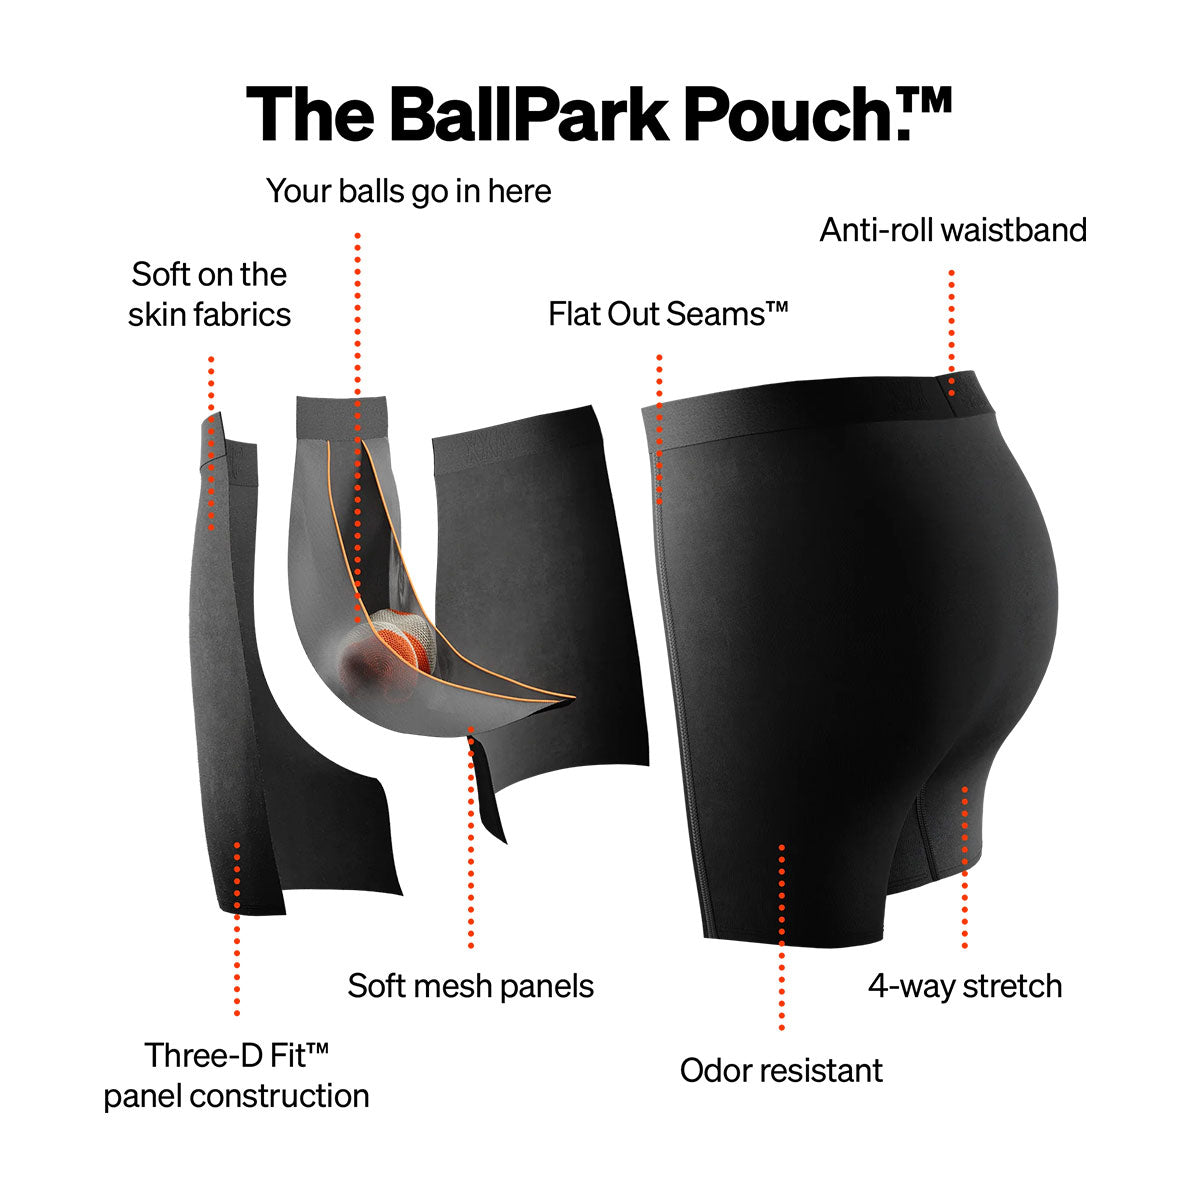 SAXX BallPark Pouch Features